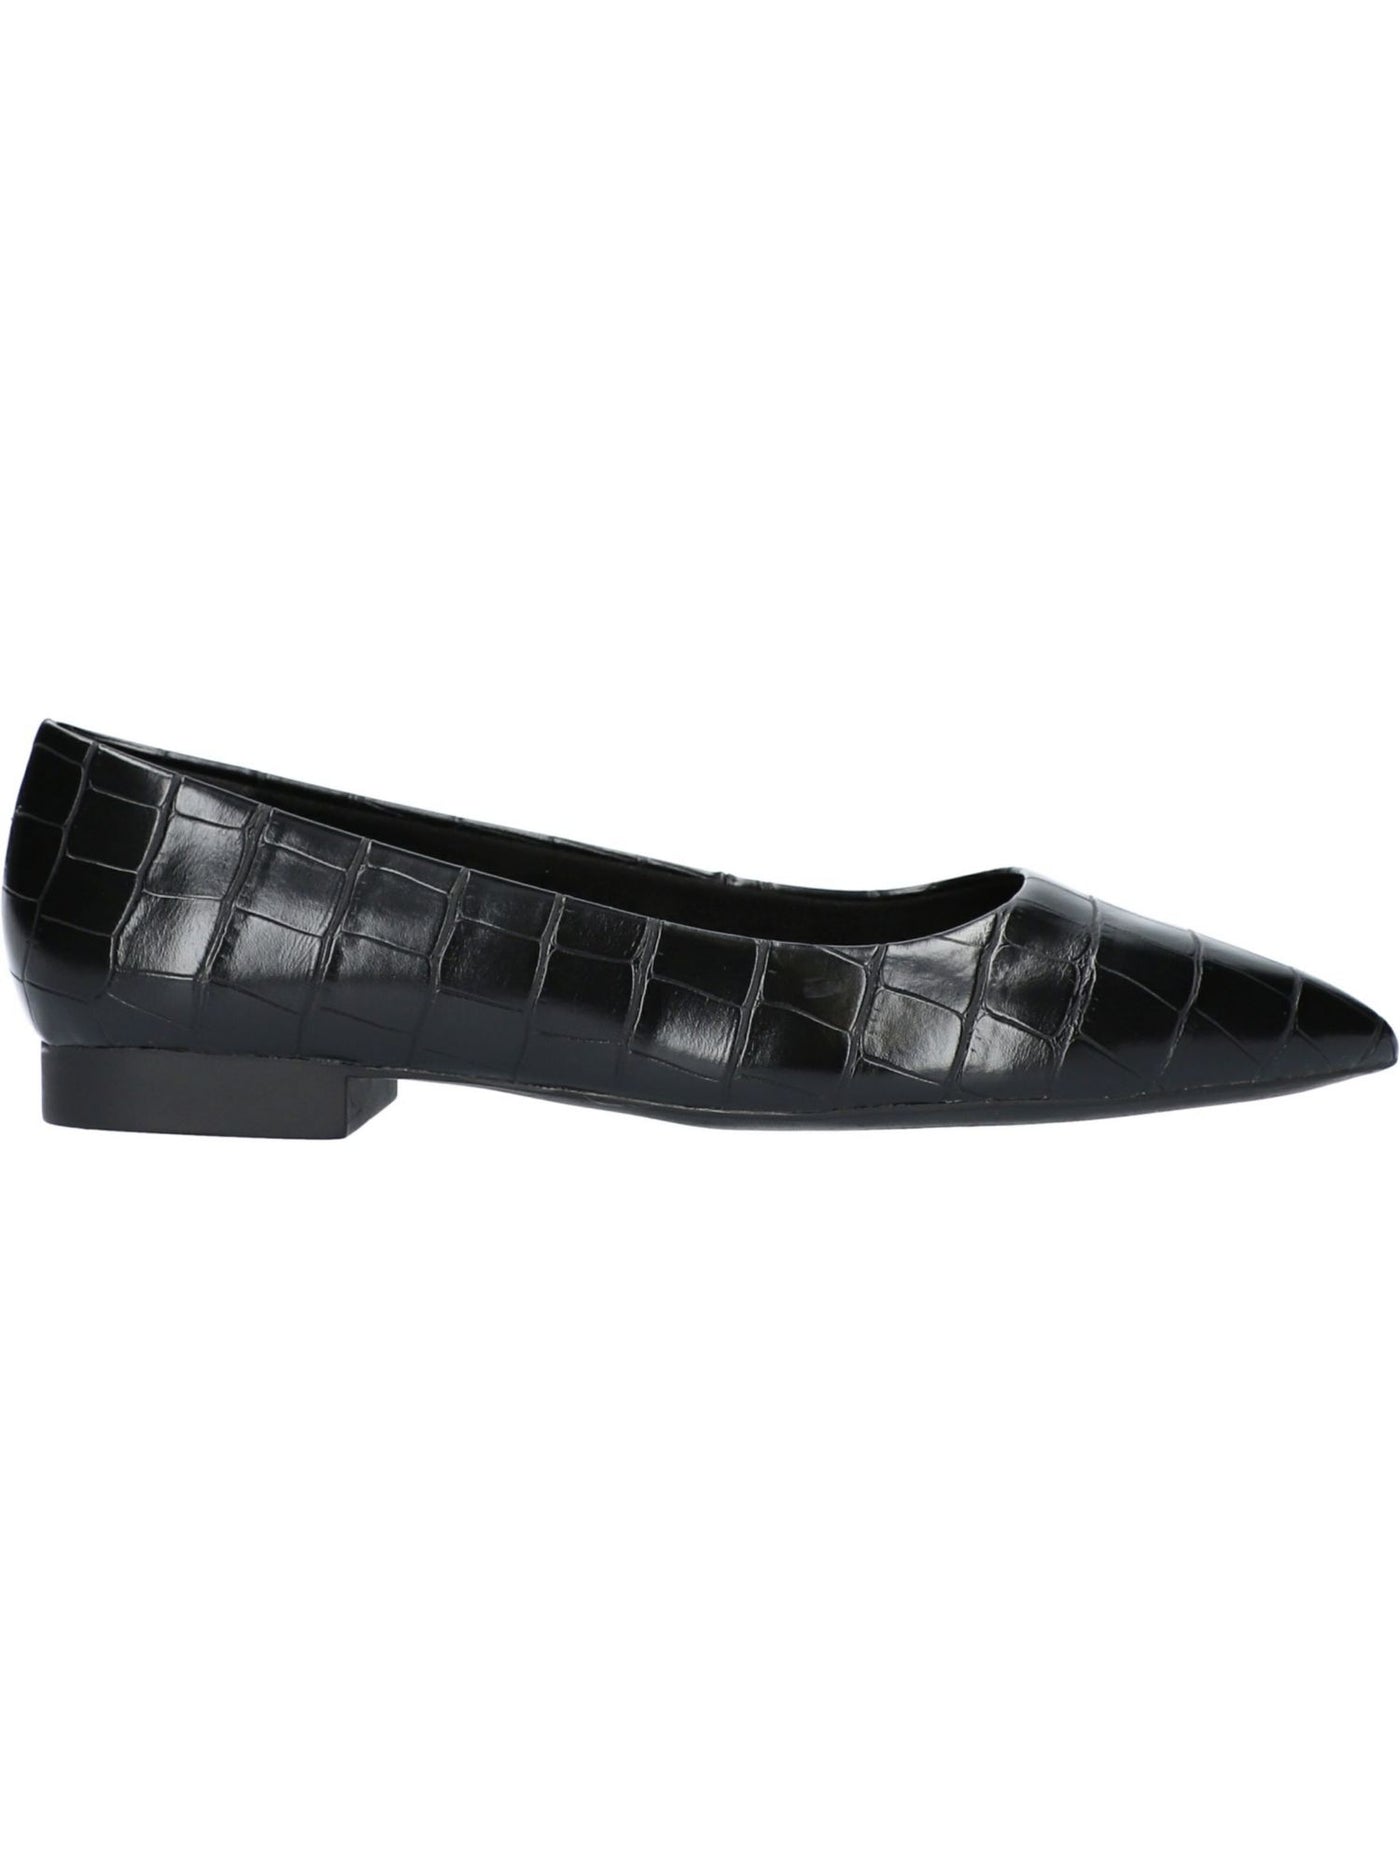 BELLA VITA Womens Black Padded Vivien Pointed Toe Slip On Dress Flats Shoes 12 M